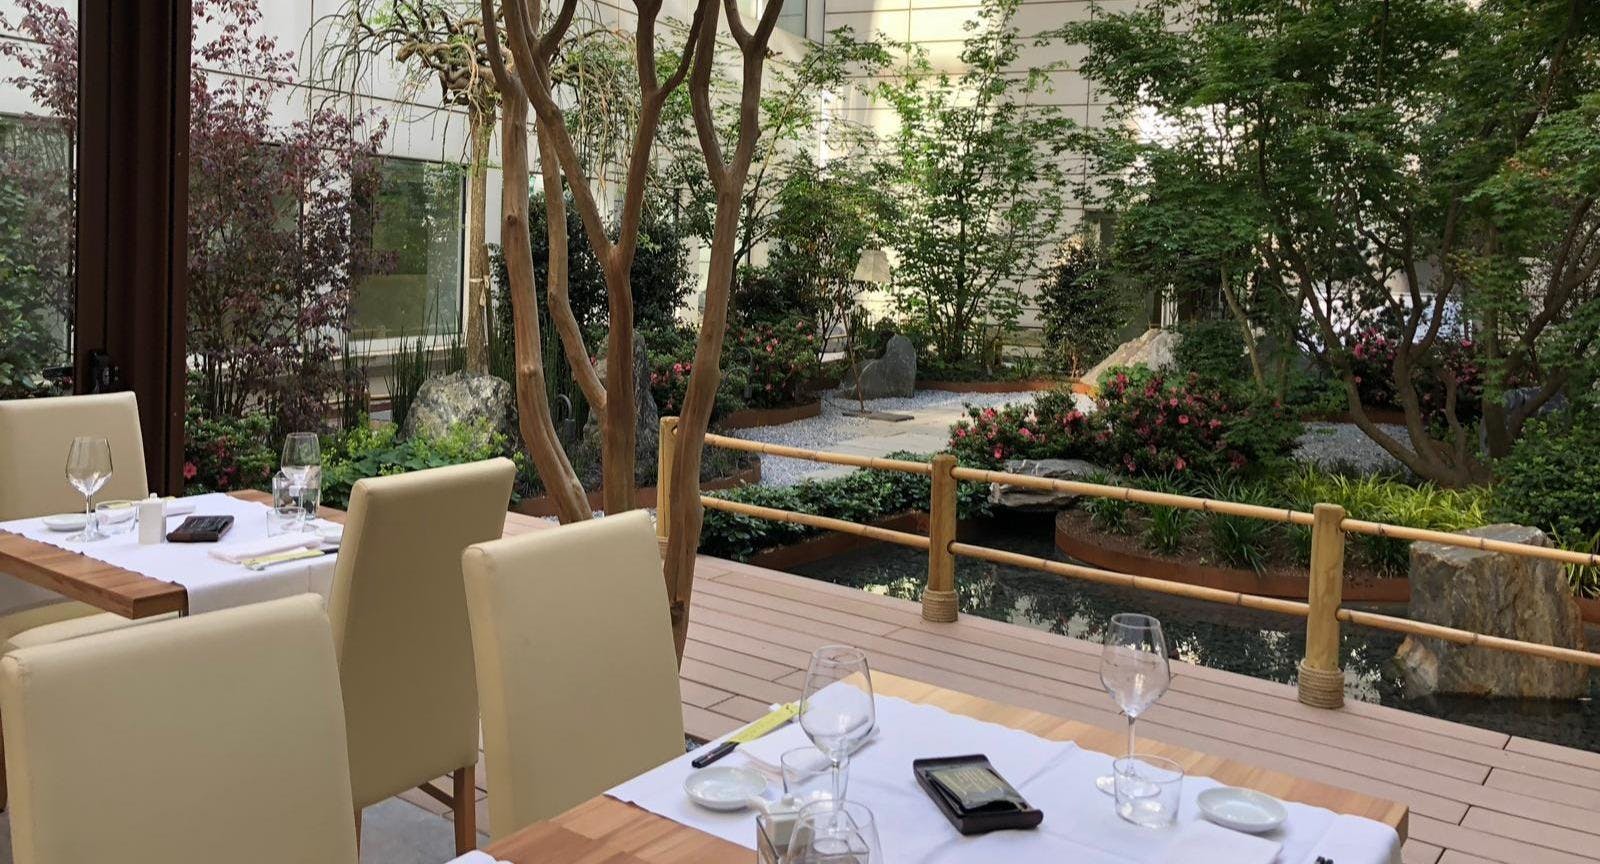 Photo of restaurant Basara Milano Washington in Washington, Rome